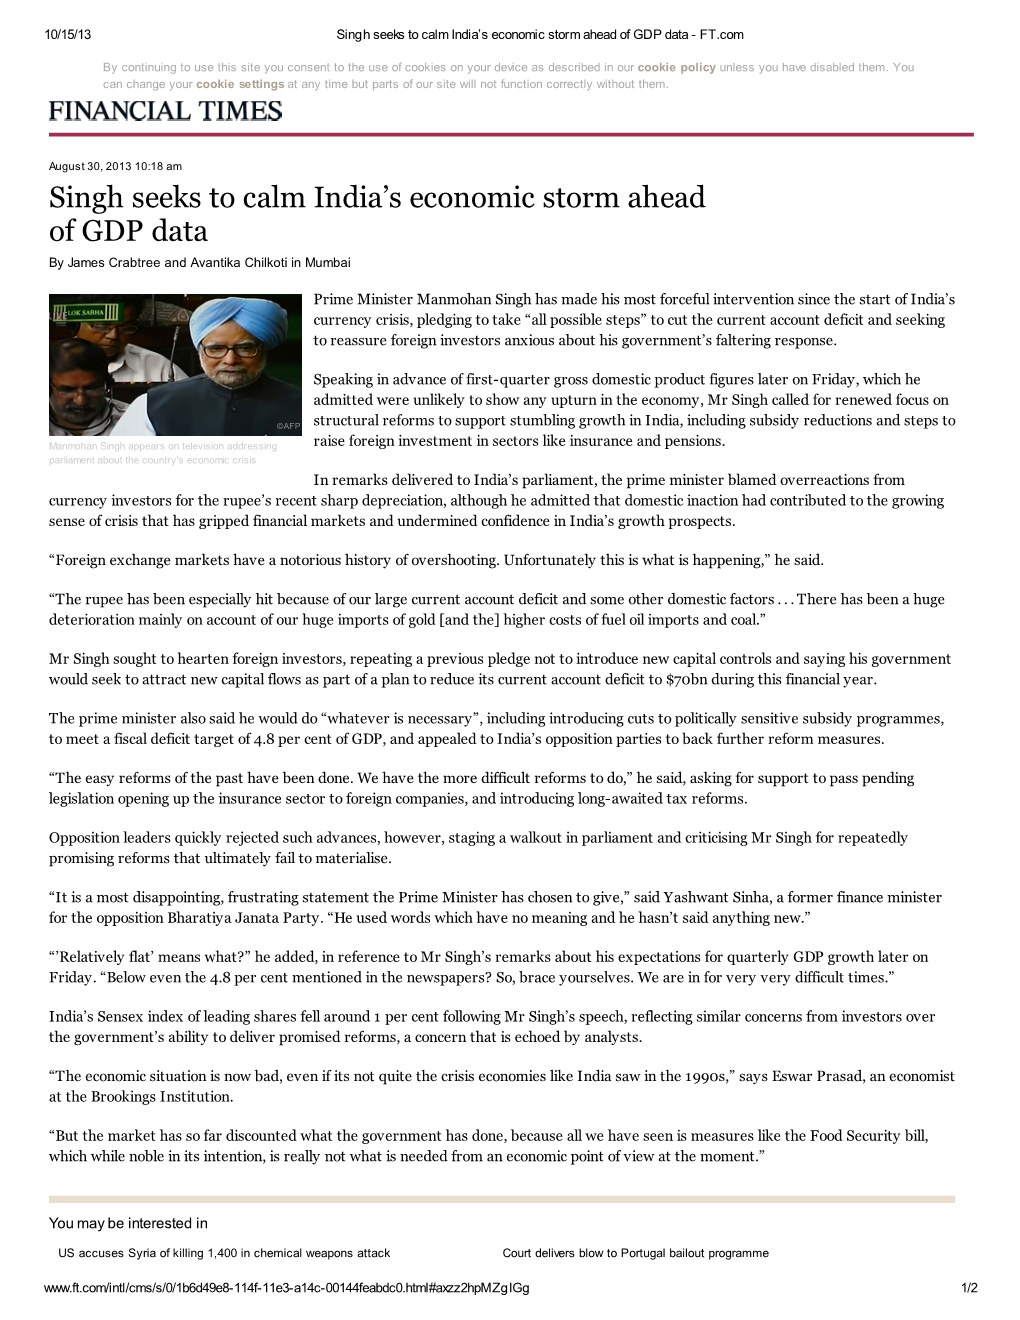 Singh Seeks to Calm India's Economic Storm Ahead